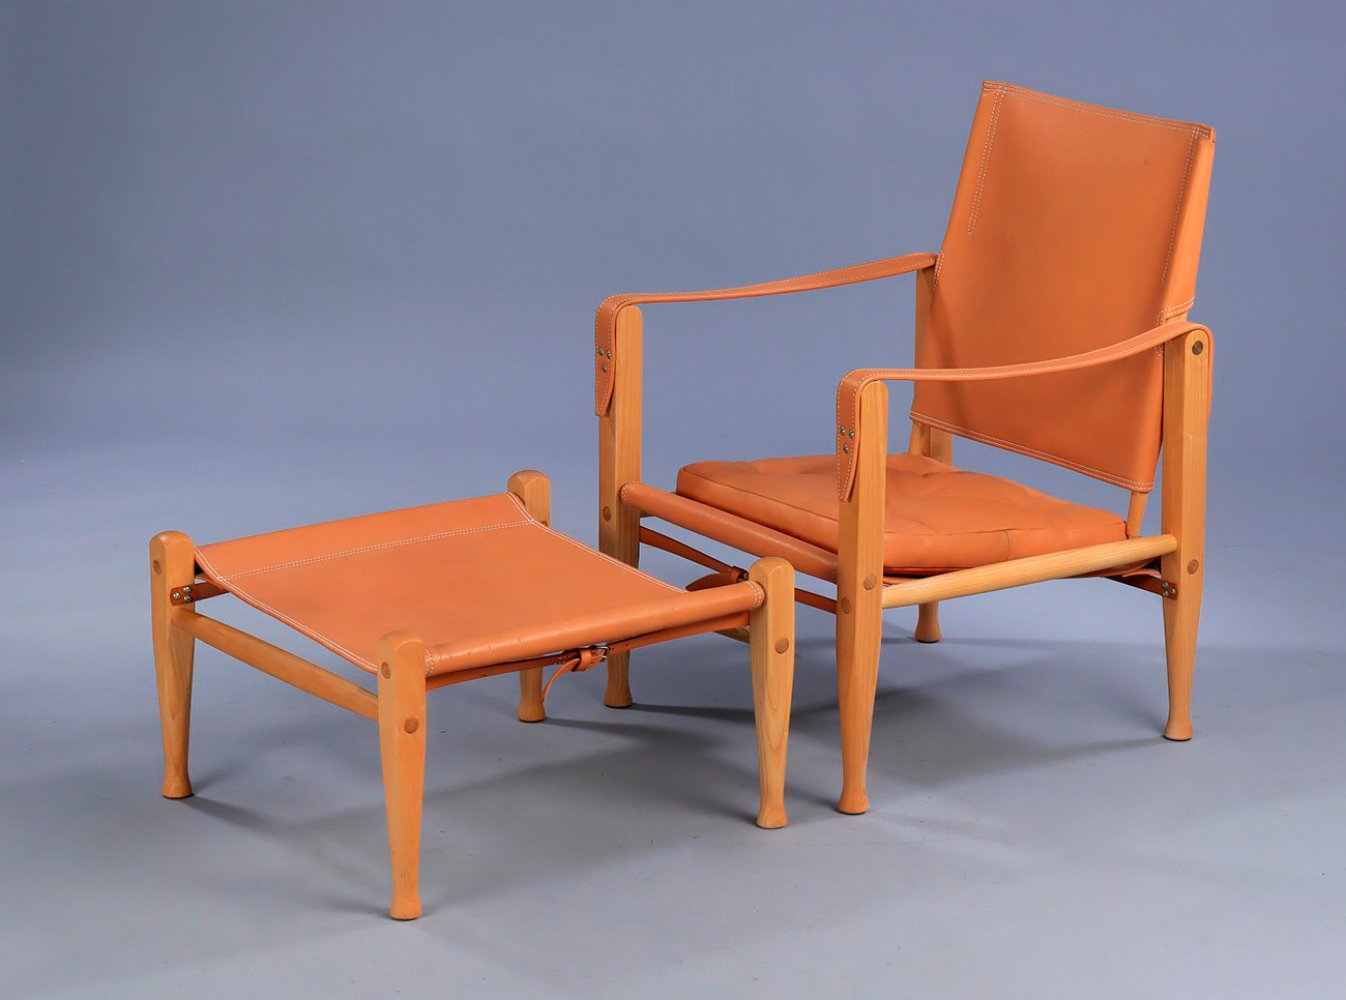 KAARE KLINT (Frederiksberg, 1888-Copenhagen, 1954) for RUD RASMUSSEN.Safaristol chair with stool,